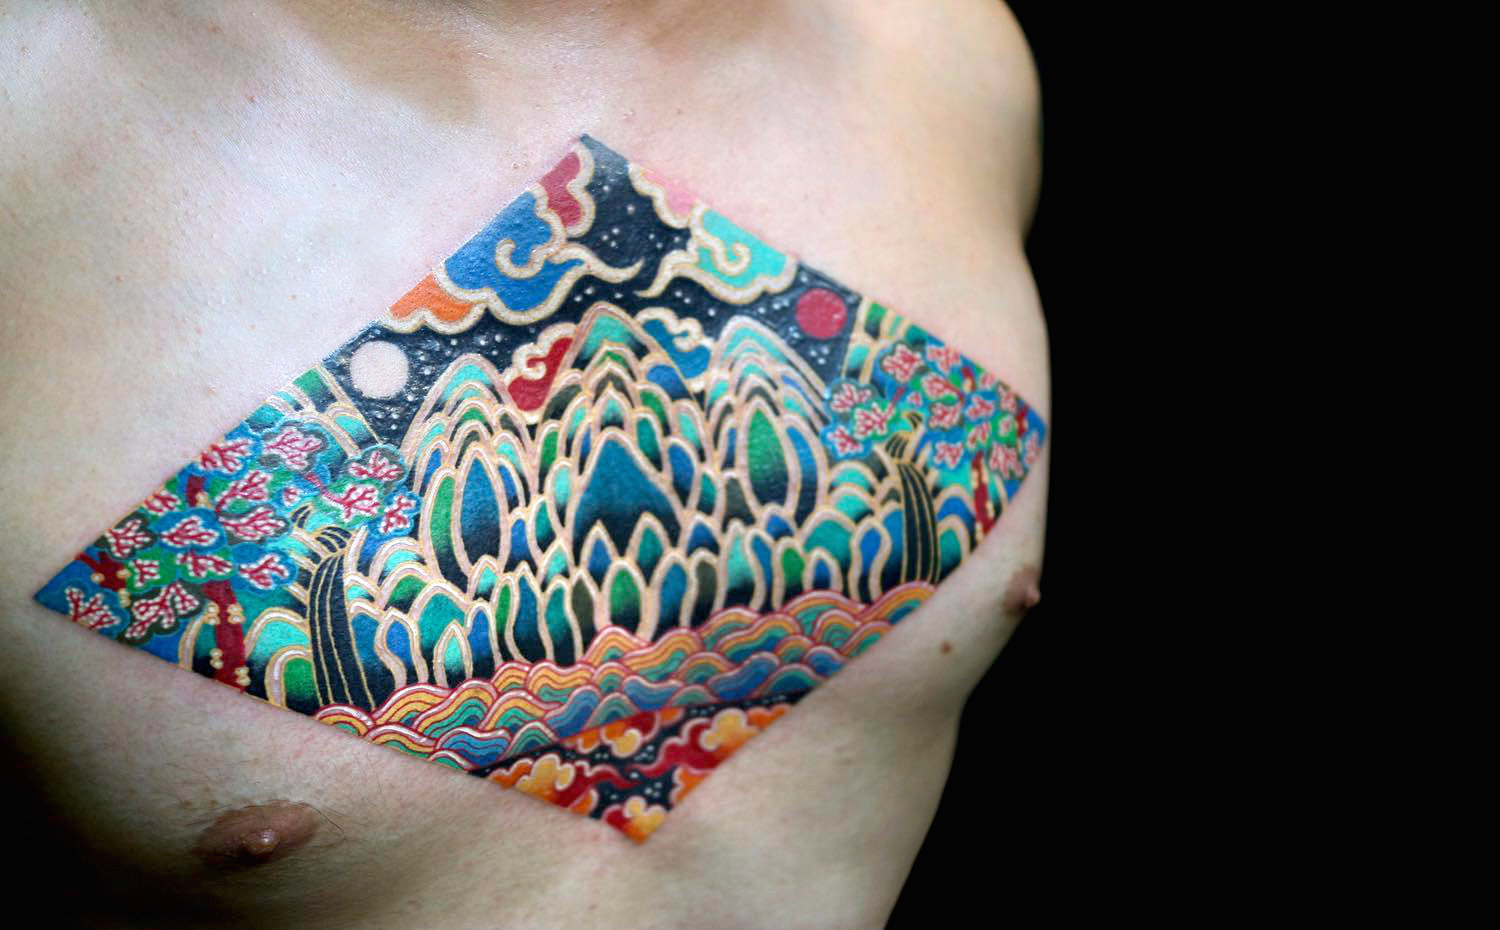 Psychedelic mushroom landscape chestpiece tattoo by Pitta KKM